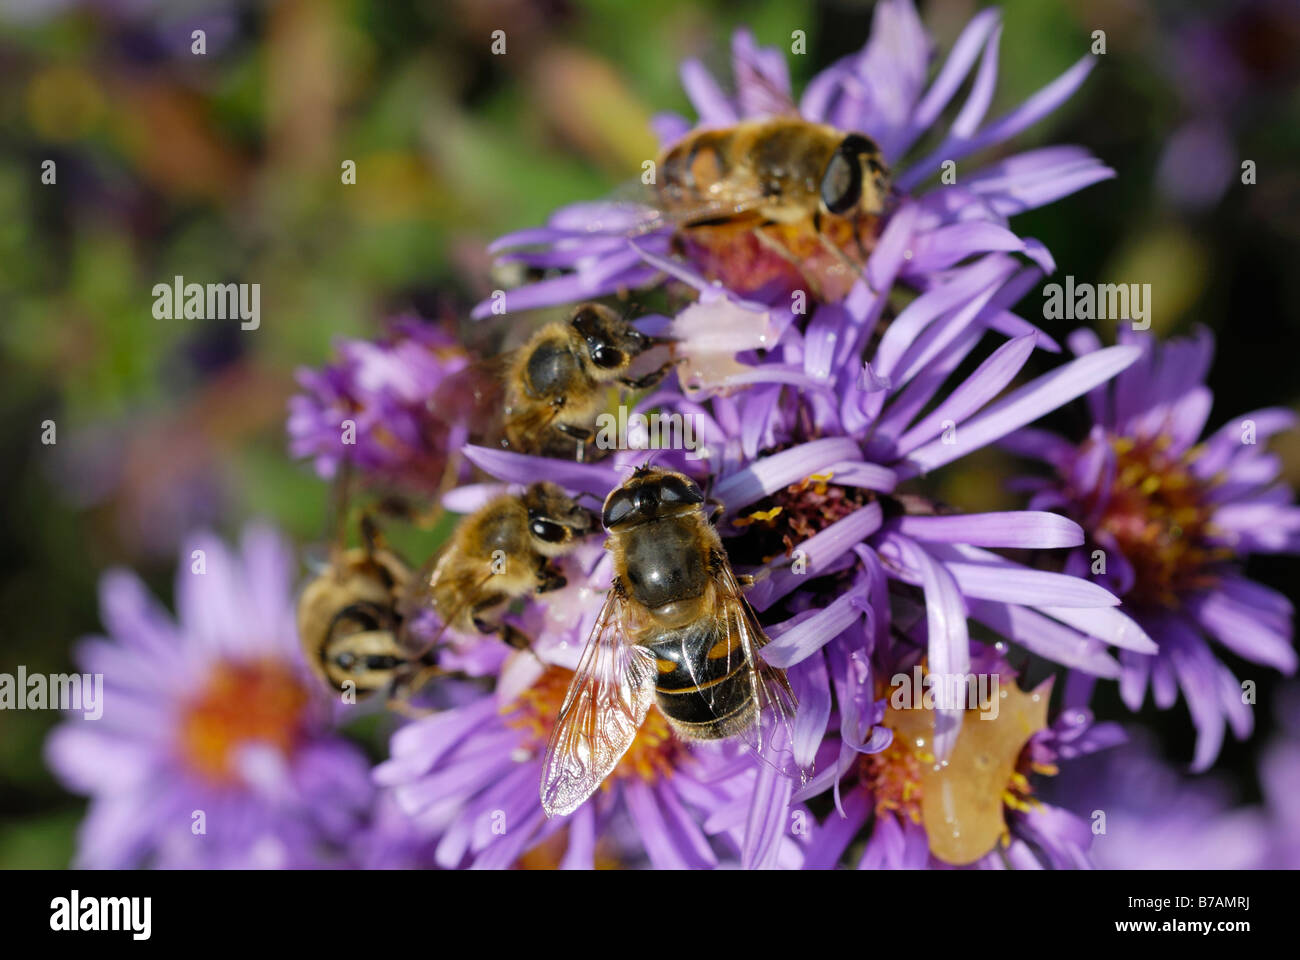 Hoverflies, (Episyrphus balteatus) and bees (Api mellifera) on aromatic aster blossom (Aster oblongifolius) Stock Photo